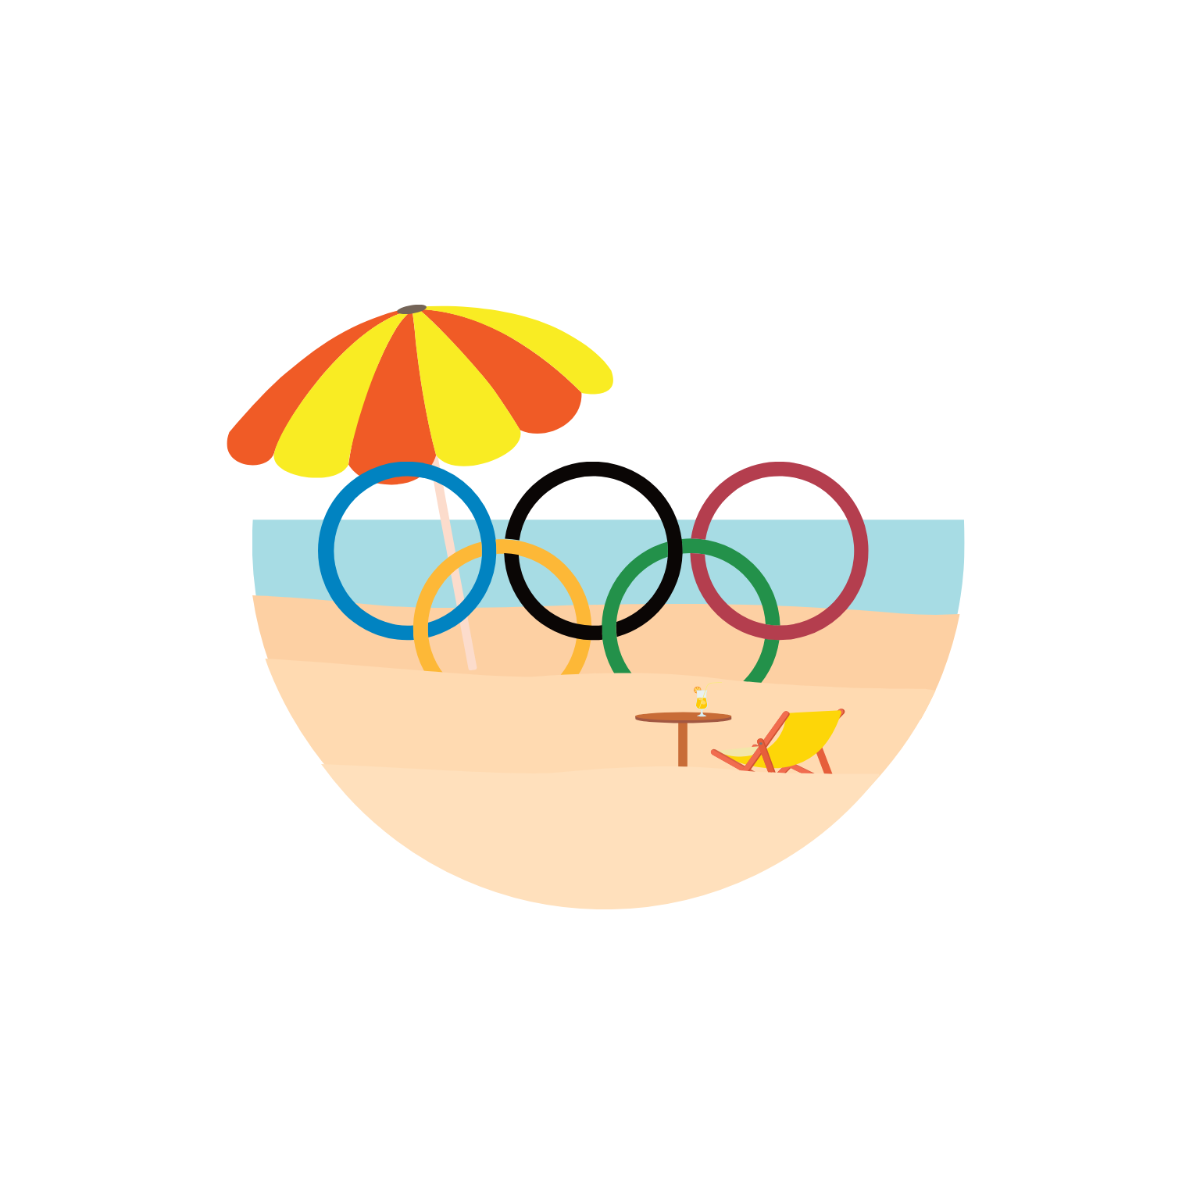 Summer Olympics Clipart